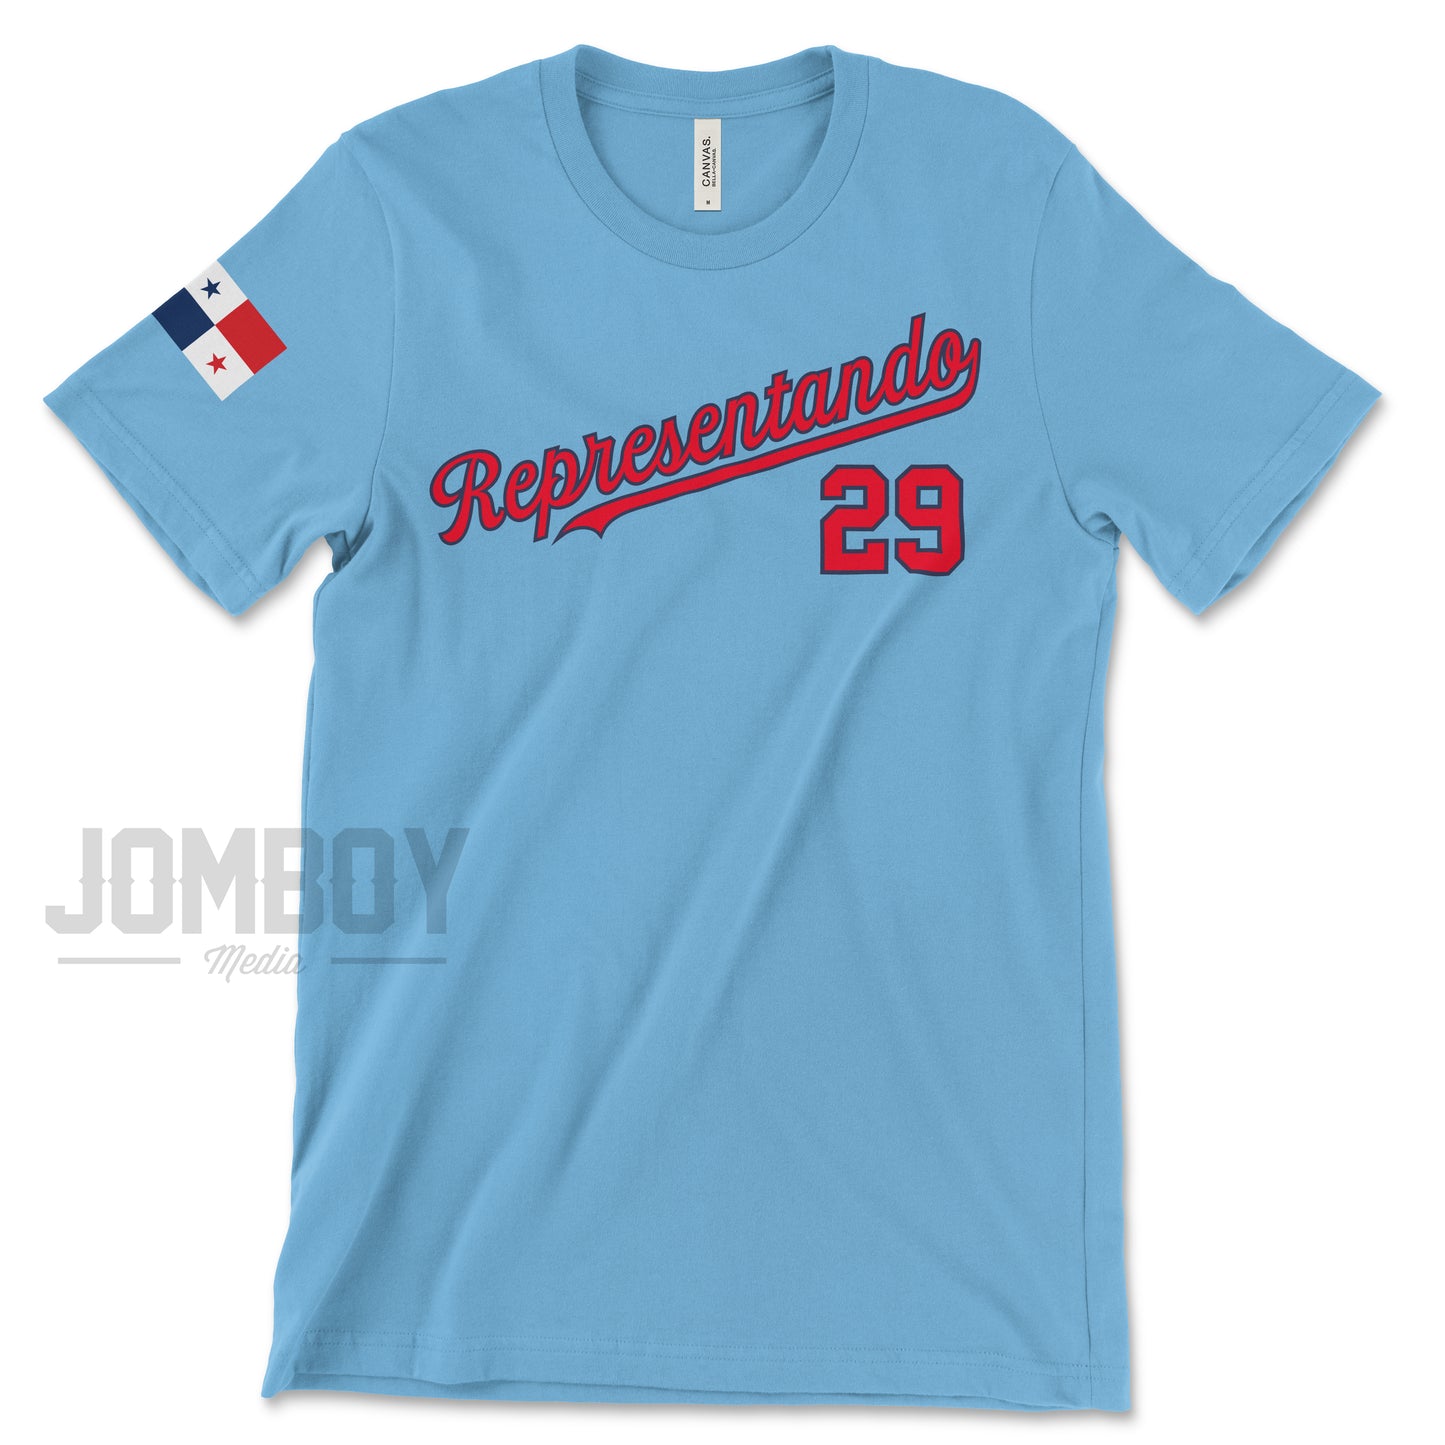 Representando 29 | Panama | T-Shirt